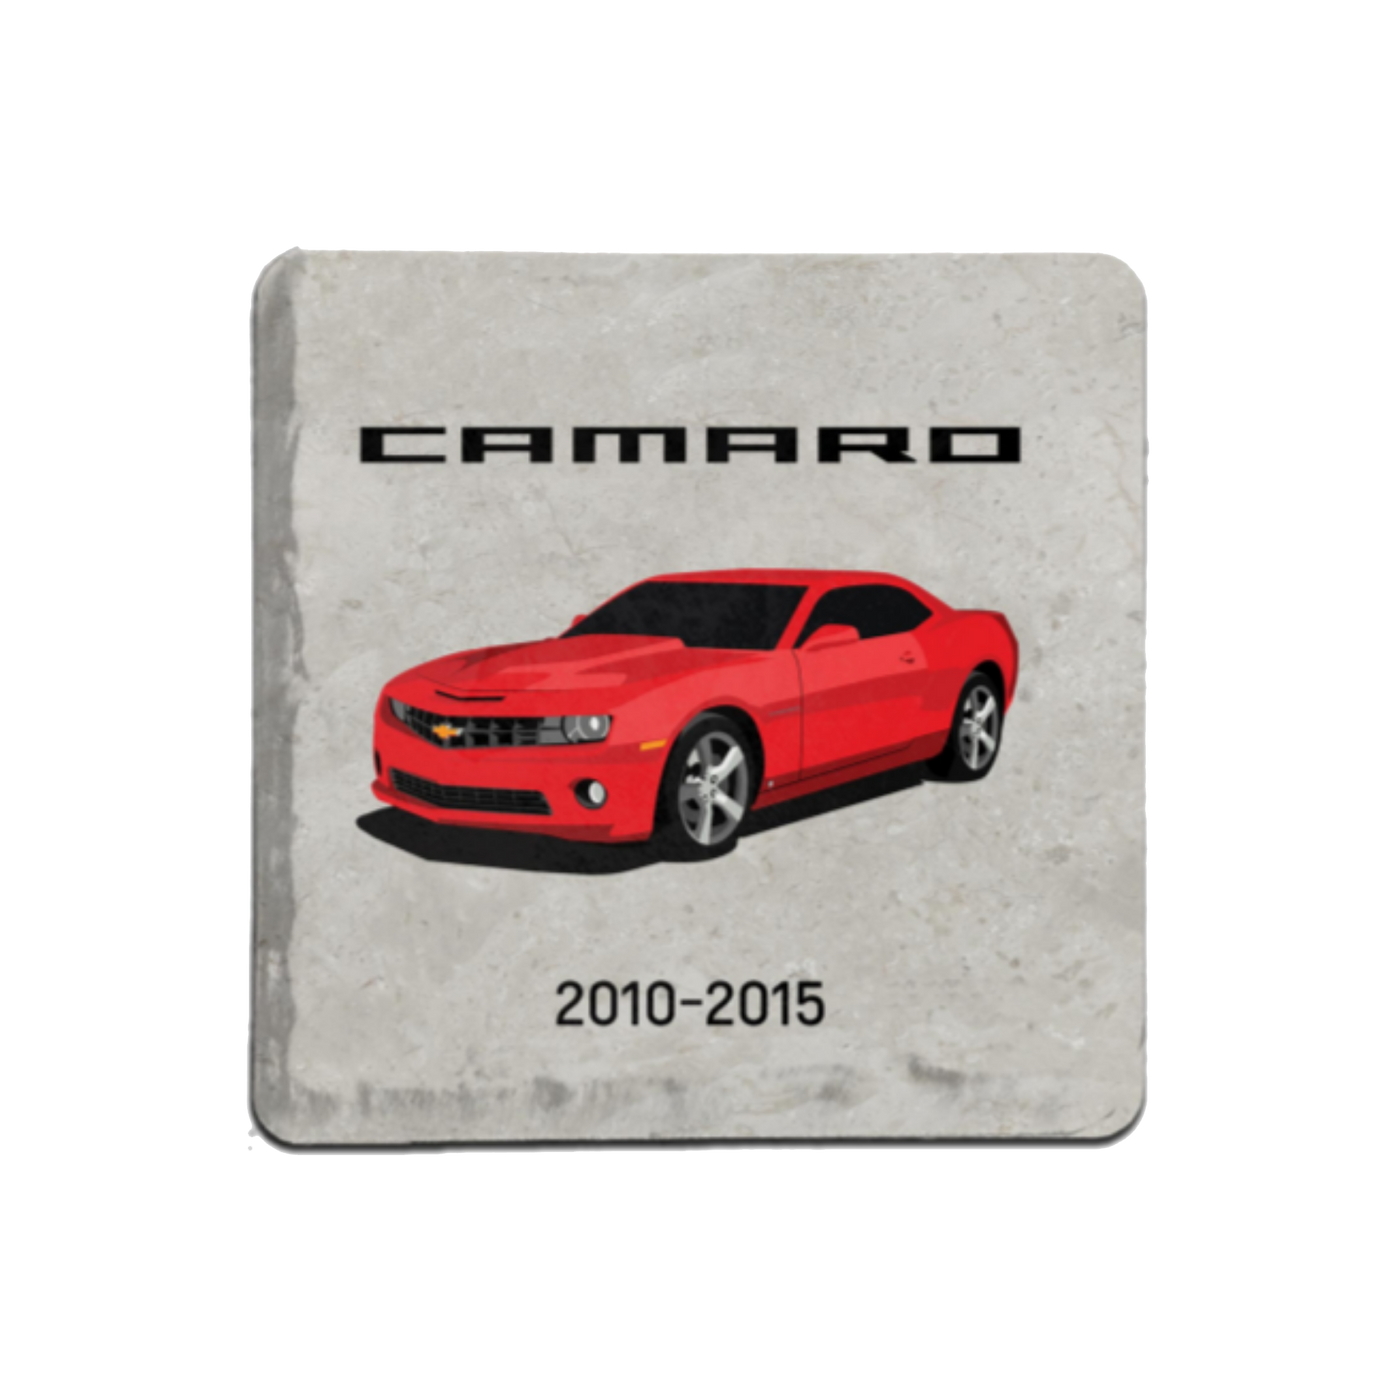 Camaro 2010-2015 Stone Coaster